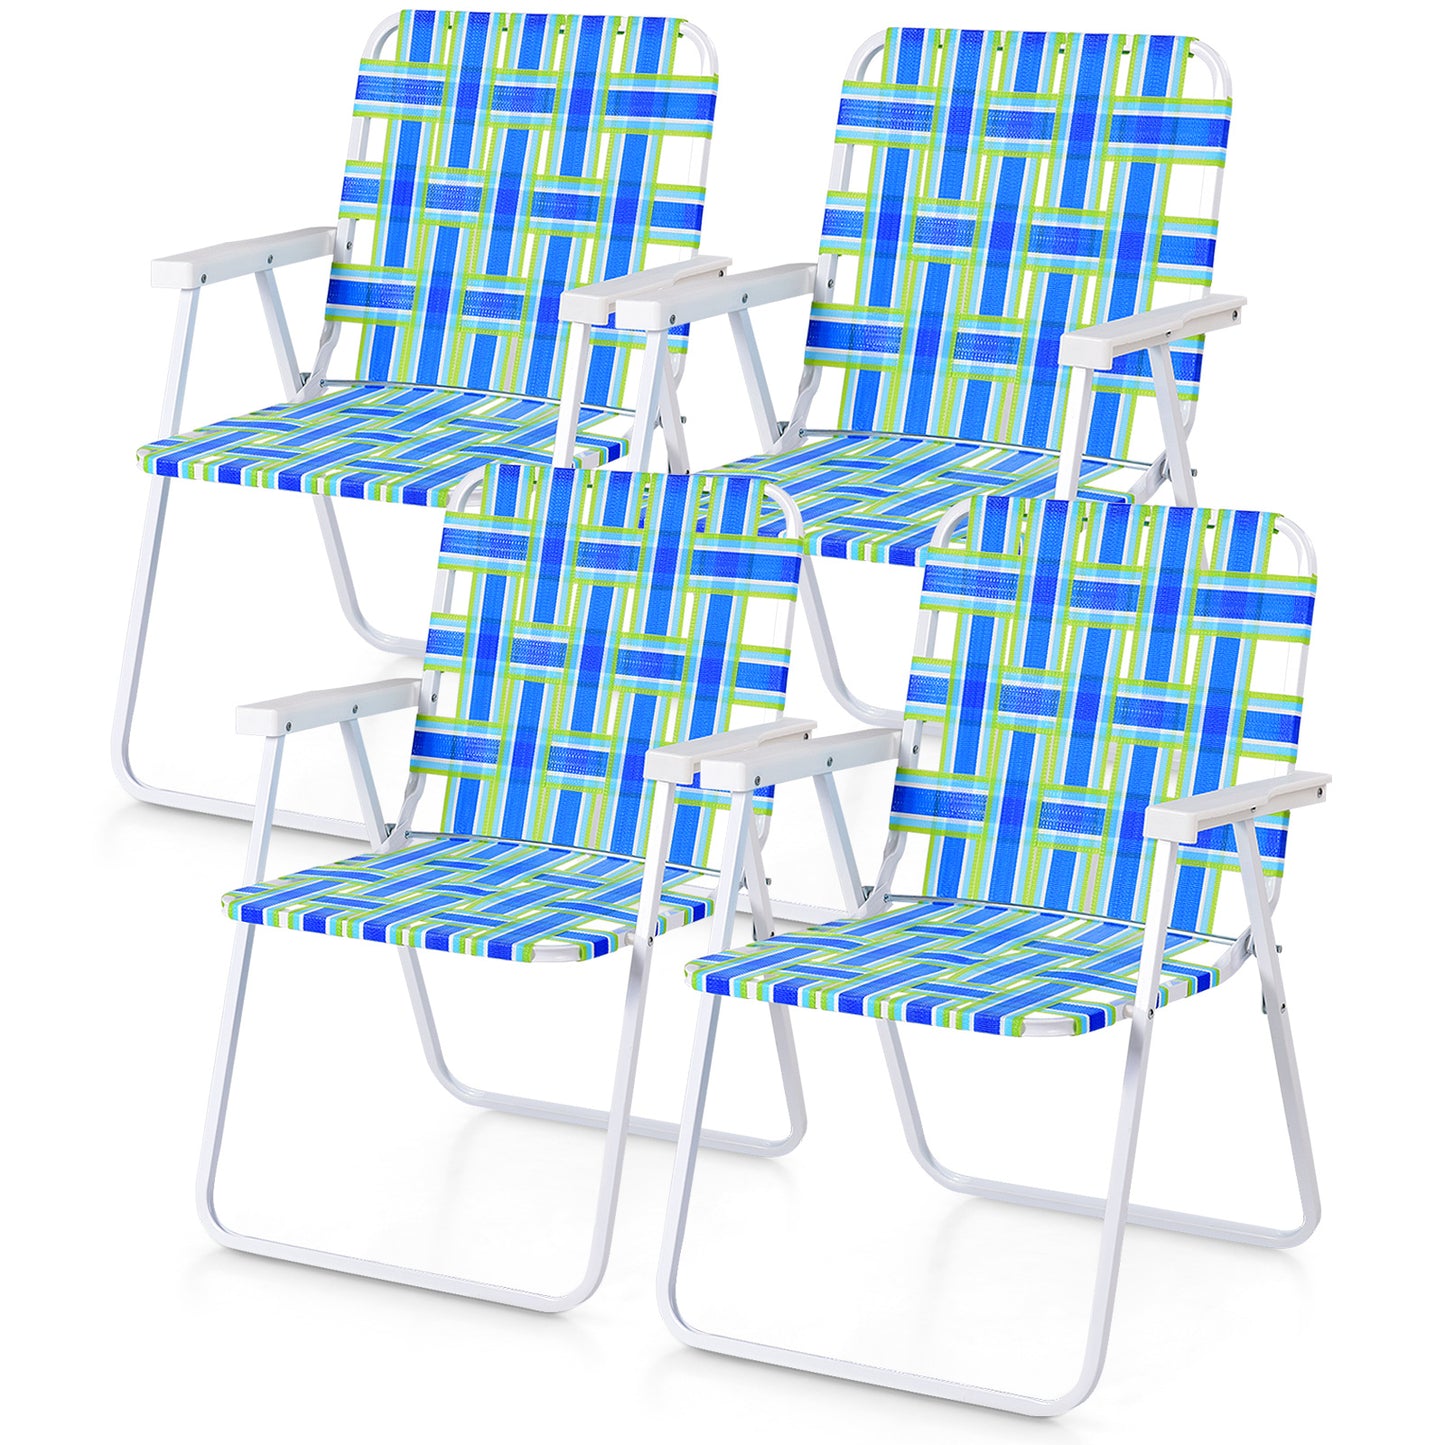 4 Pieces Folding Beach Chair Camping Lawn Webbing Chair-Blue